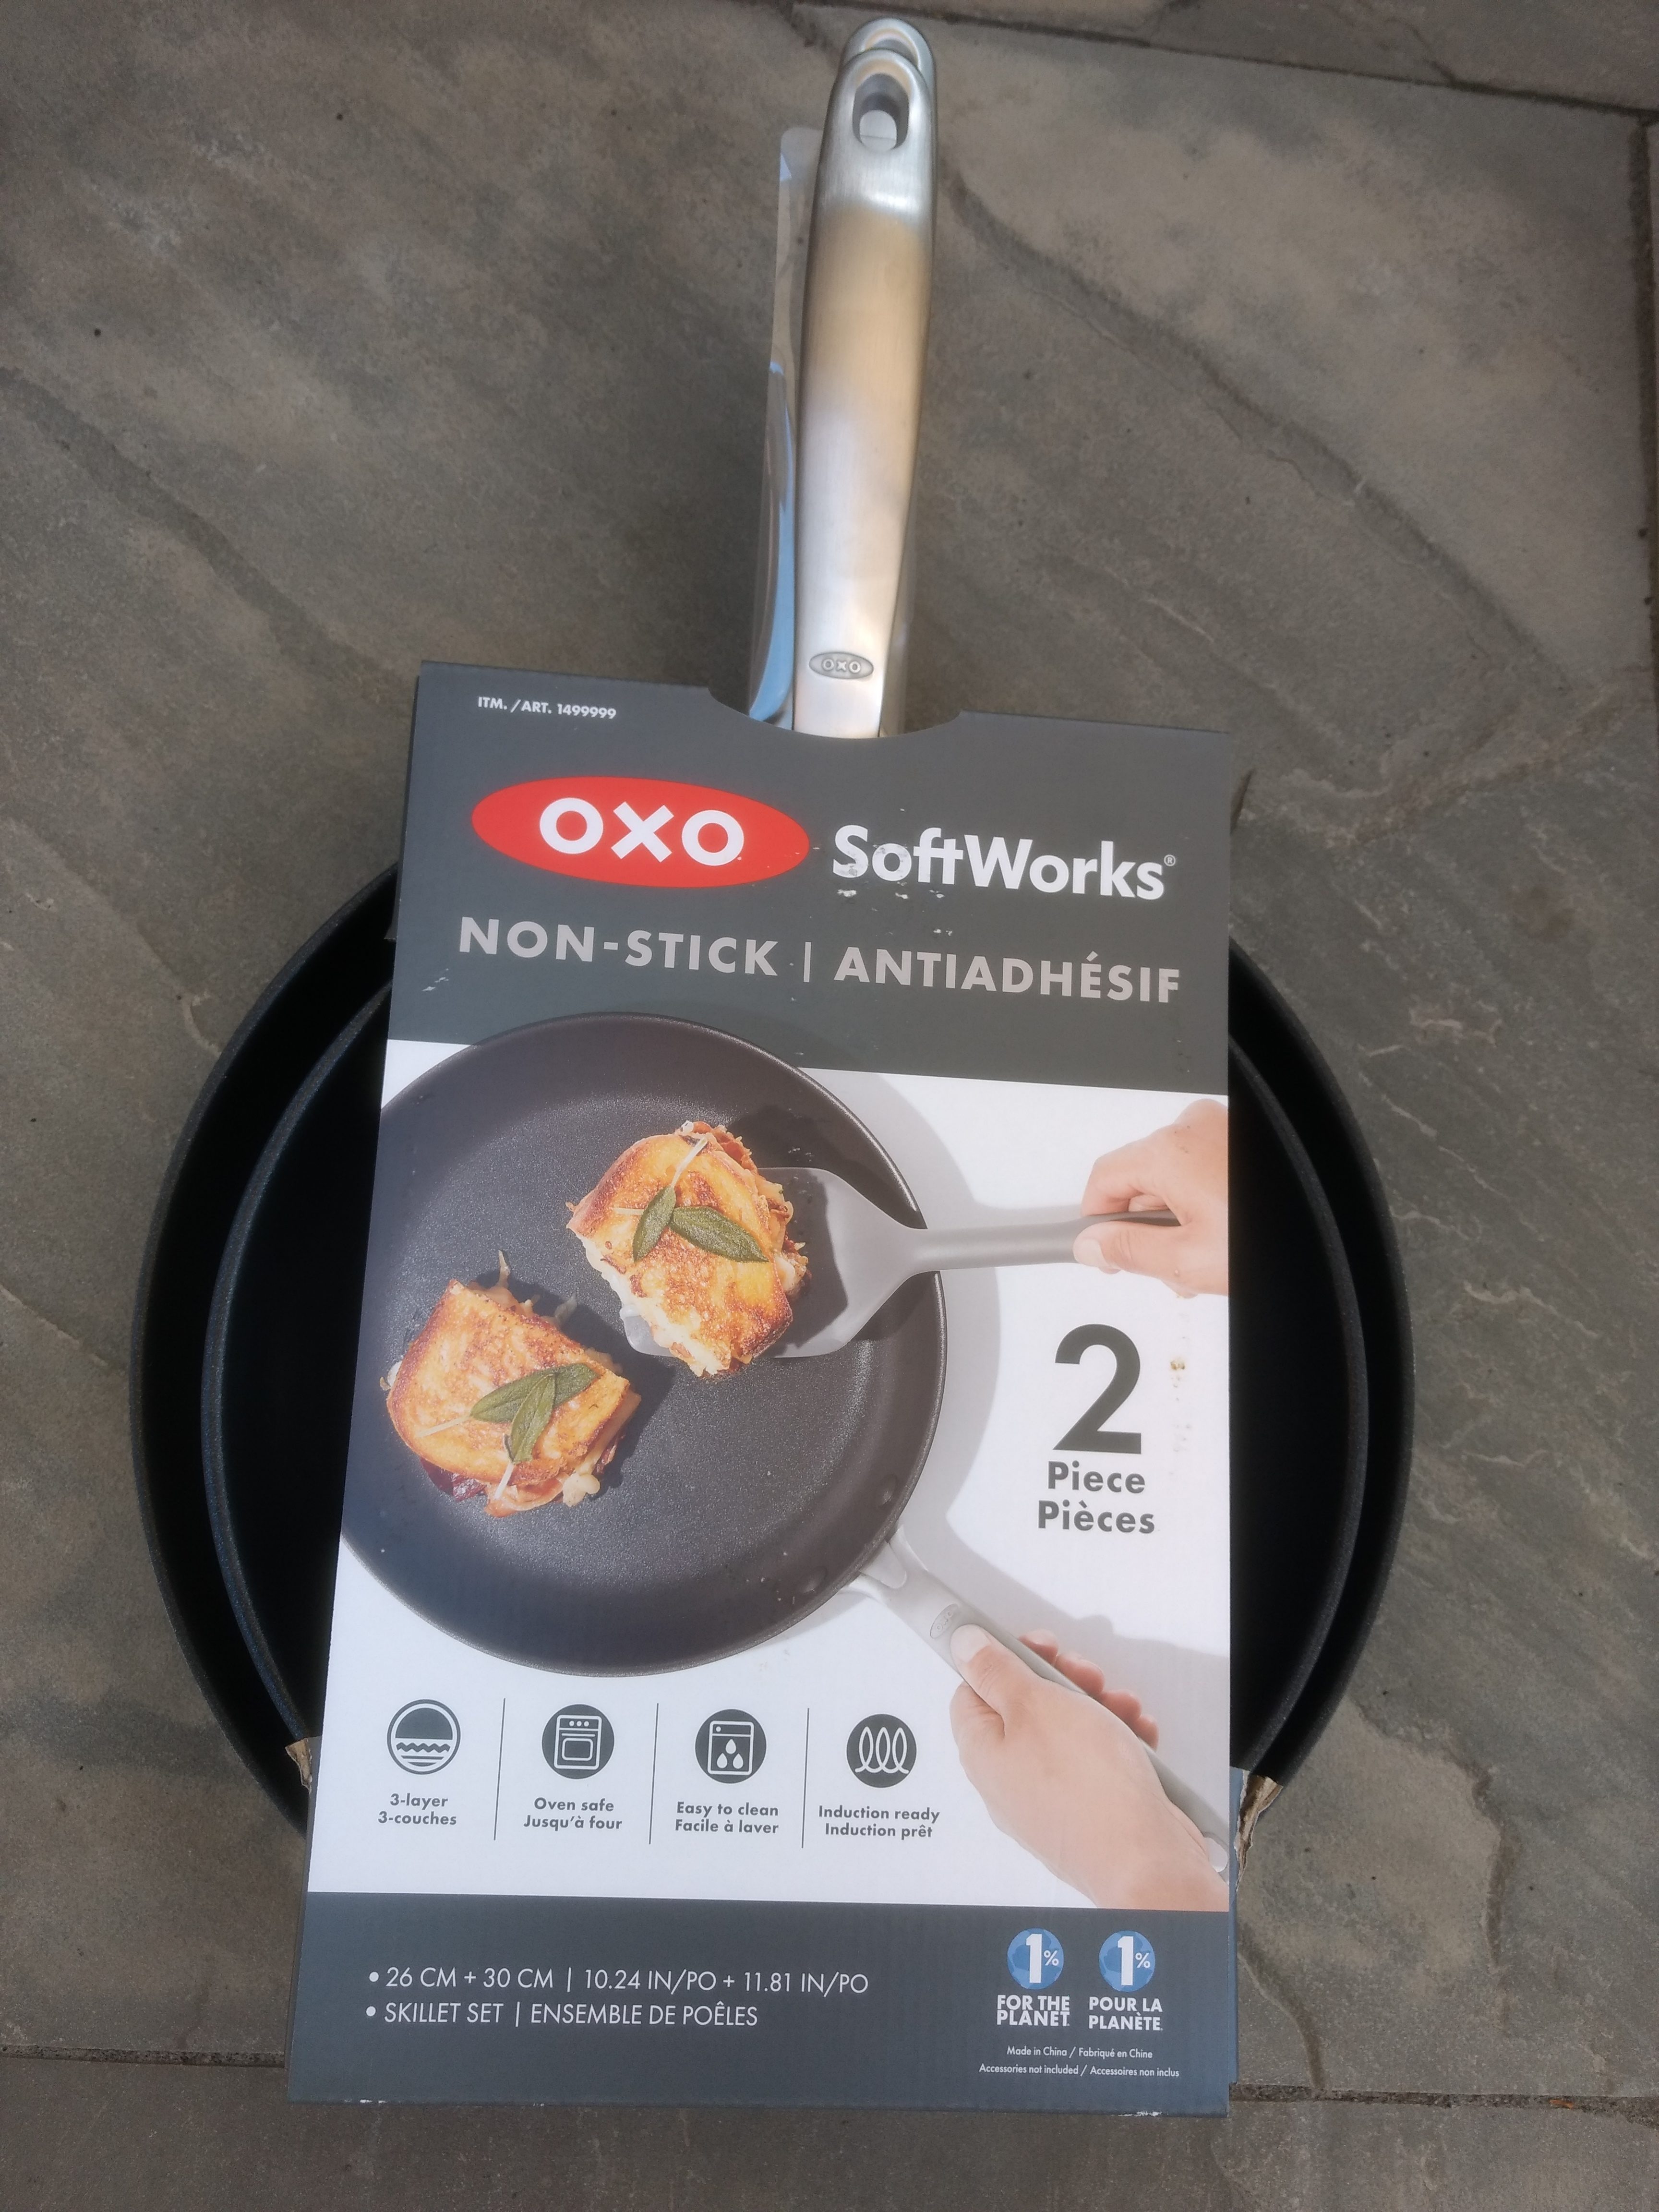 OXO Softworks Non-stick Skillet 2 Piece Set 10.5” & 12” : r/Costco